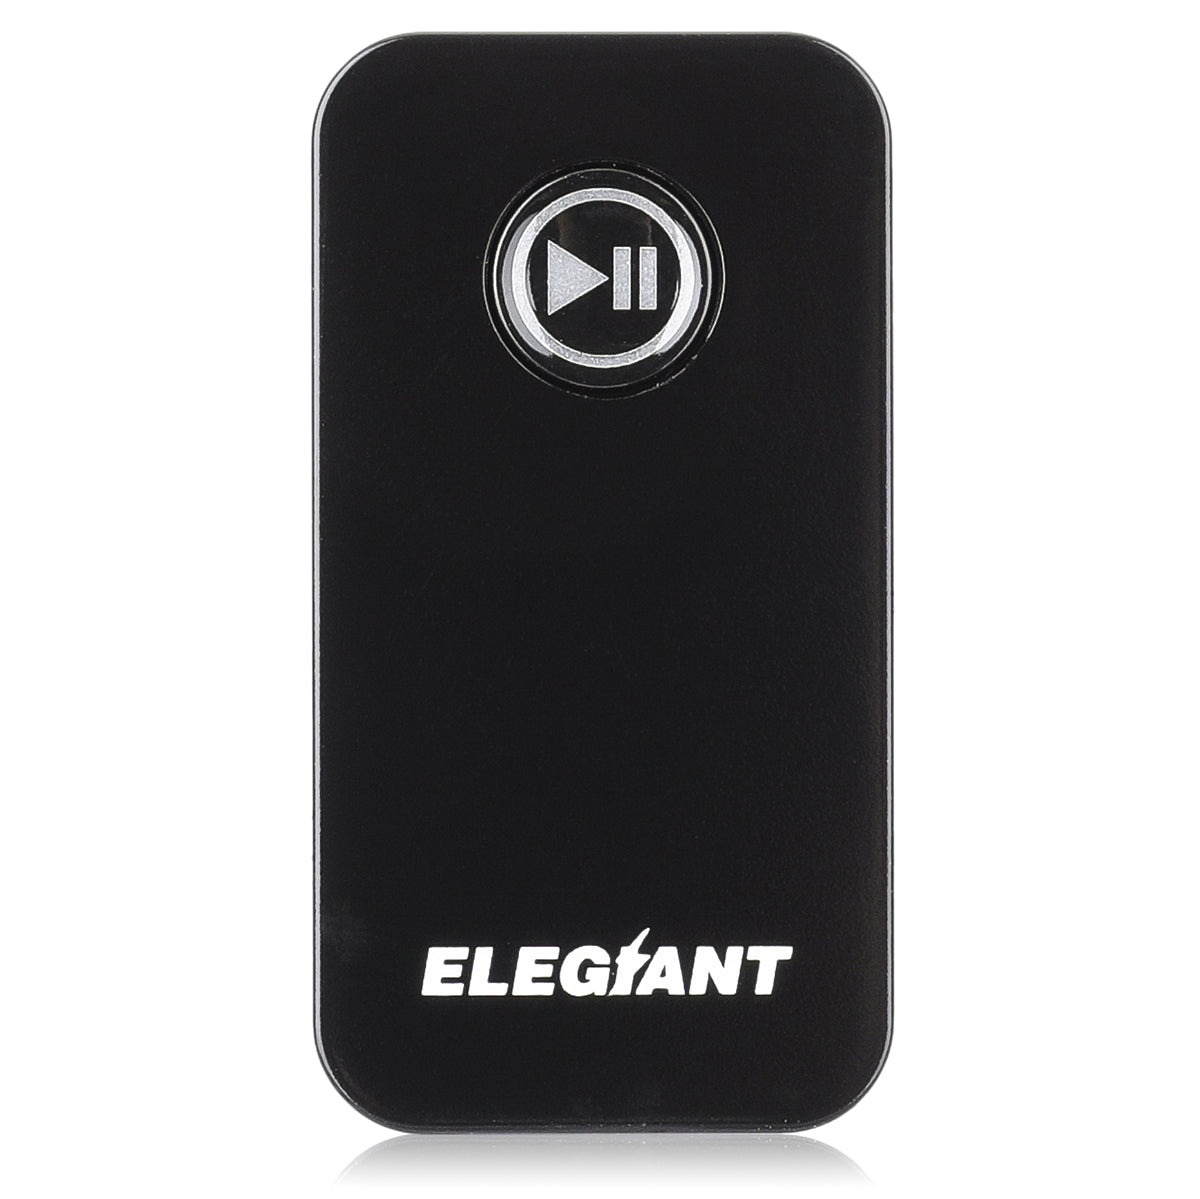 ELEGIANT BTA001 Mini bluetooth Hands Free USB Receiver 3.5mm Wireless Car Kit for Speaker Headphone - Auto GoShop